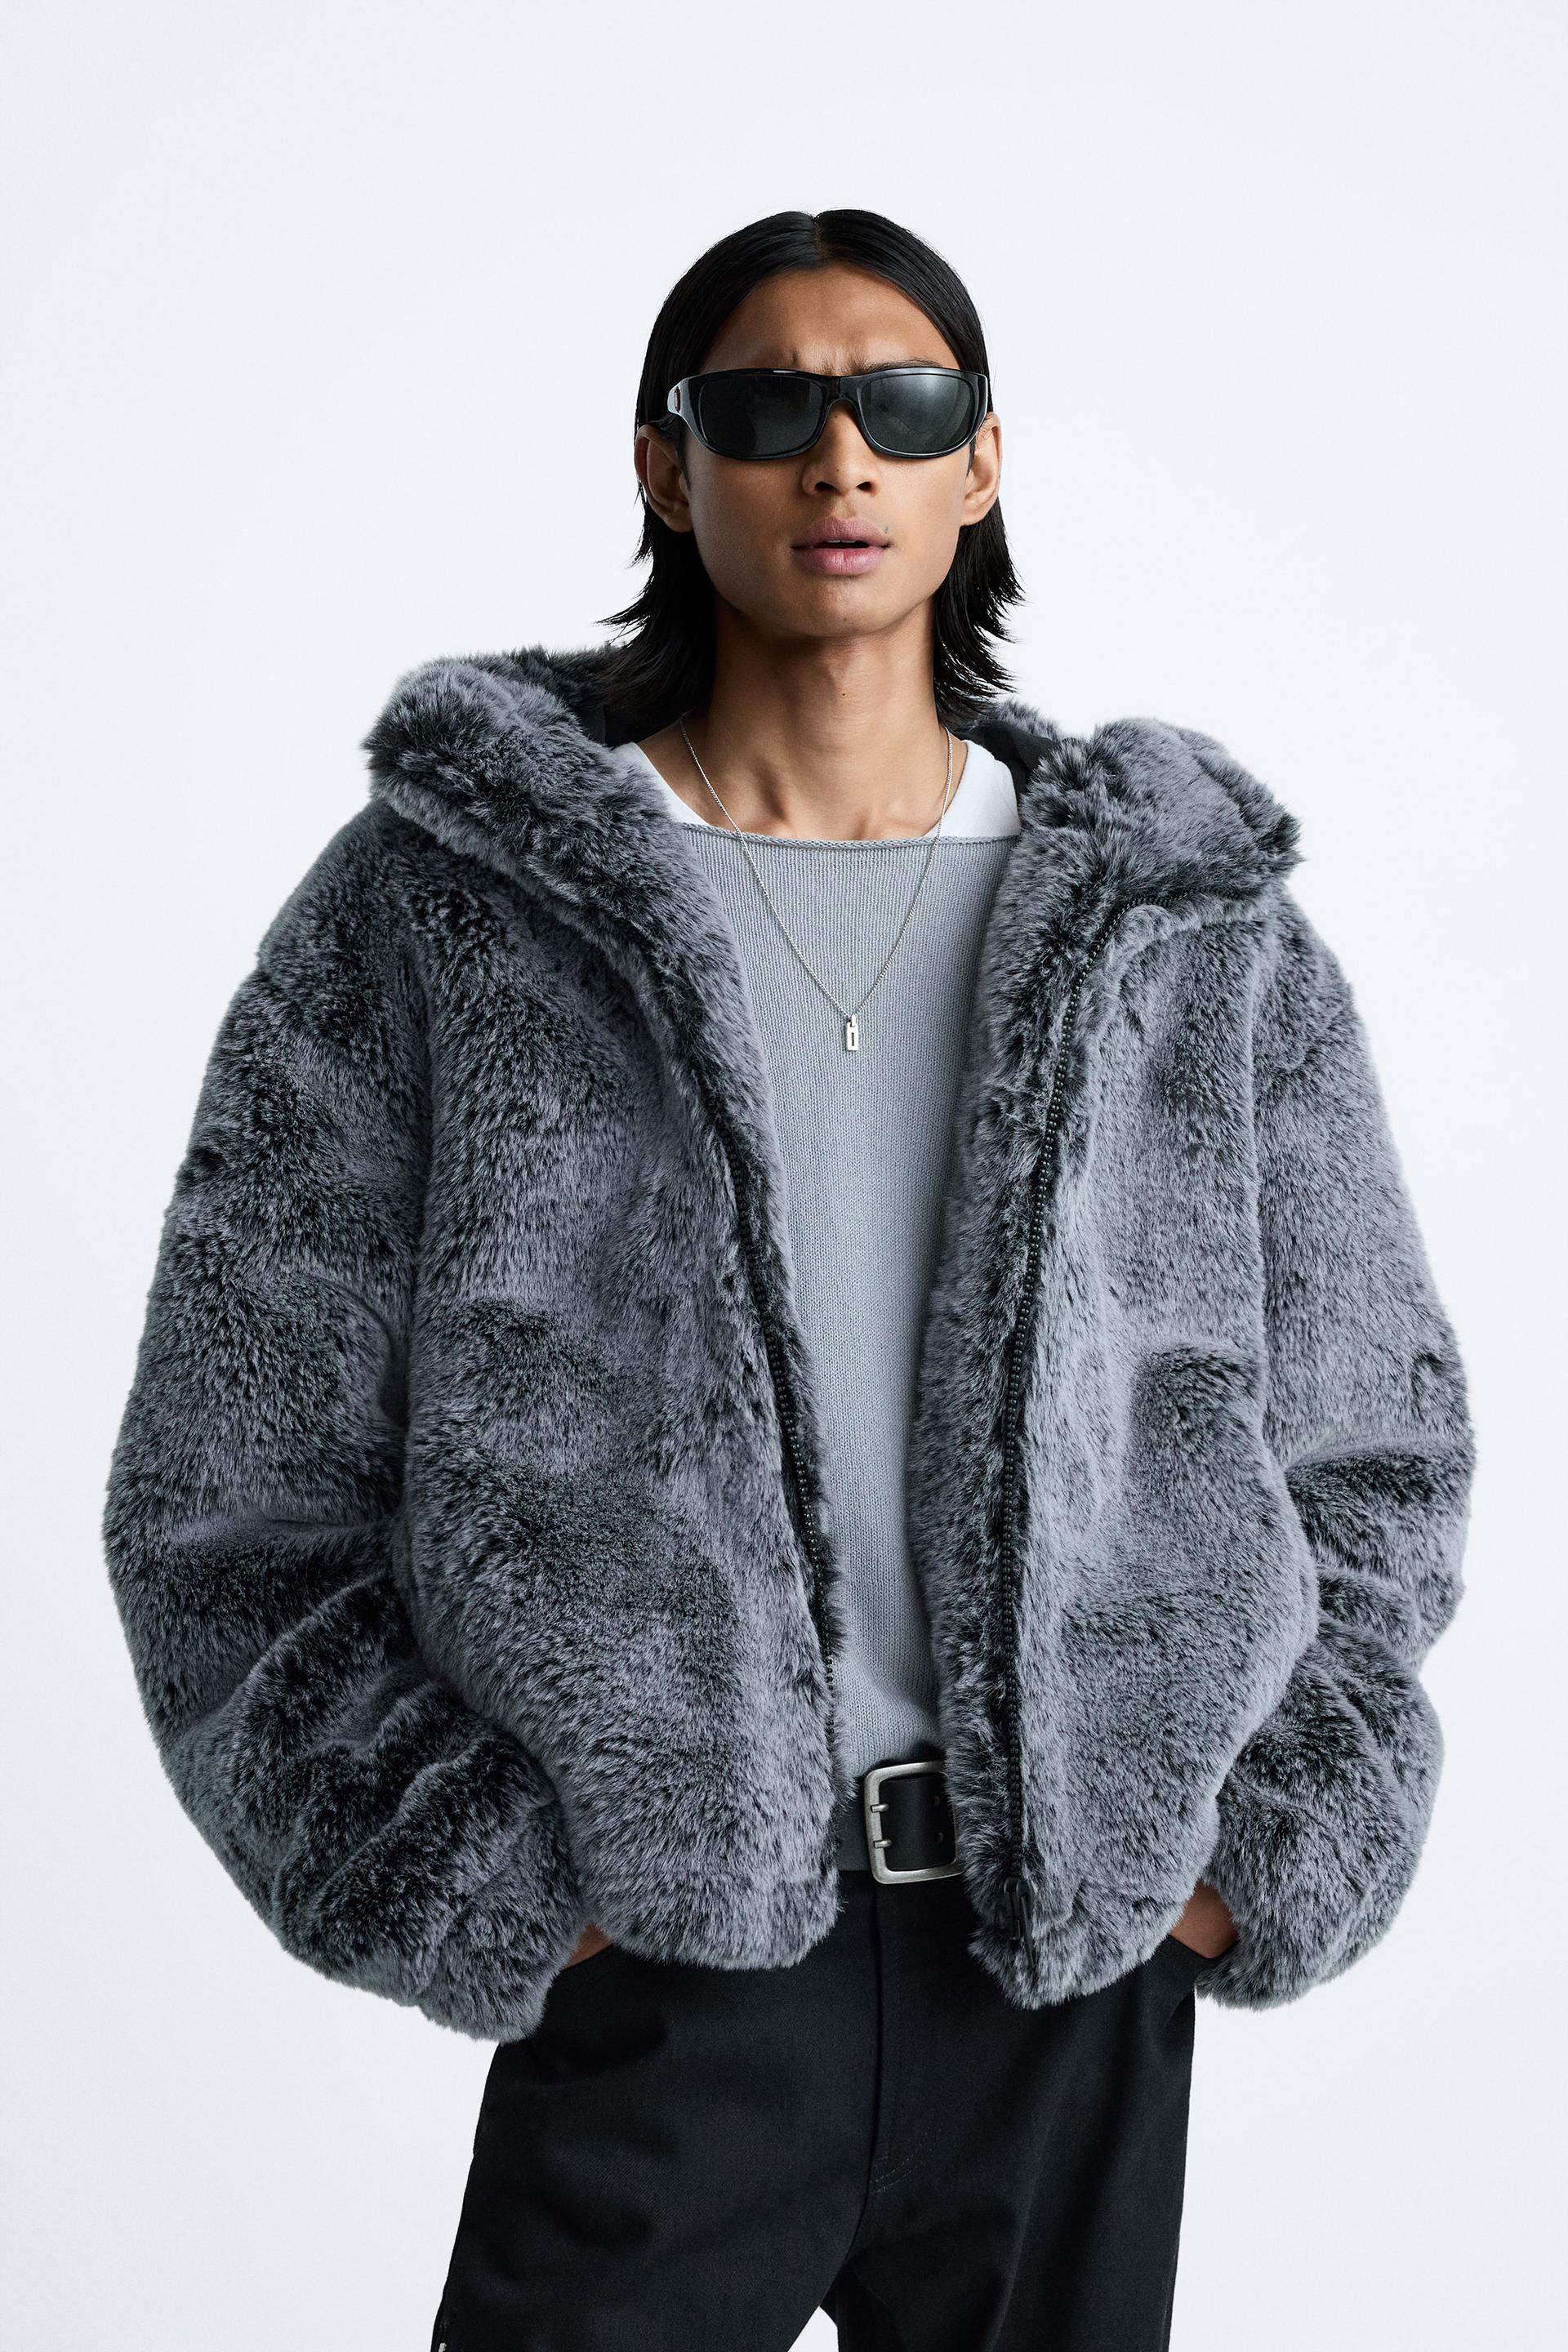 ASOS Bershka faux fur hooded jacket in blue 49.90